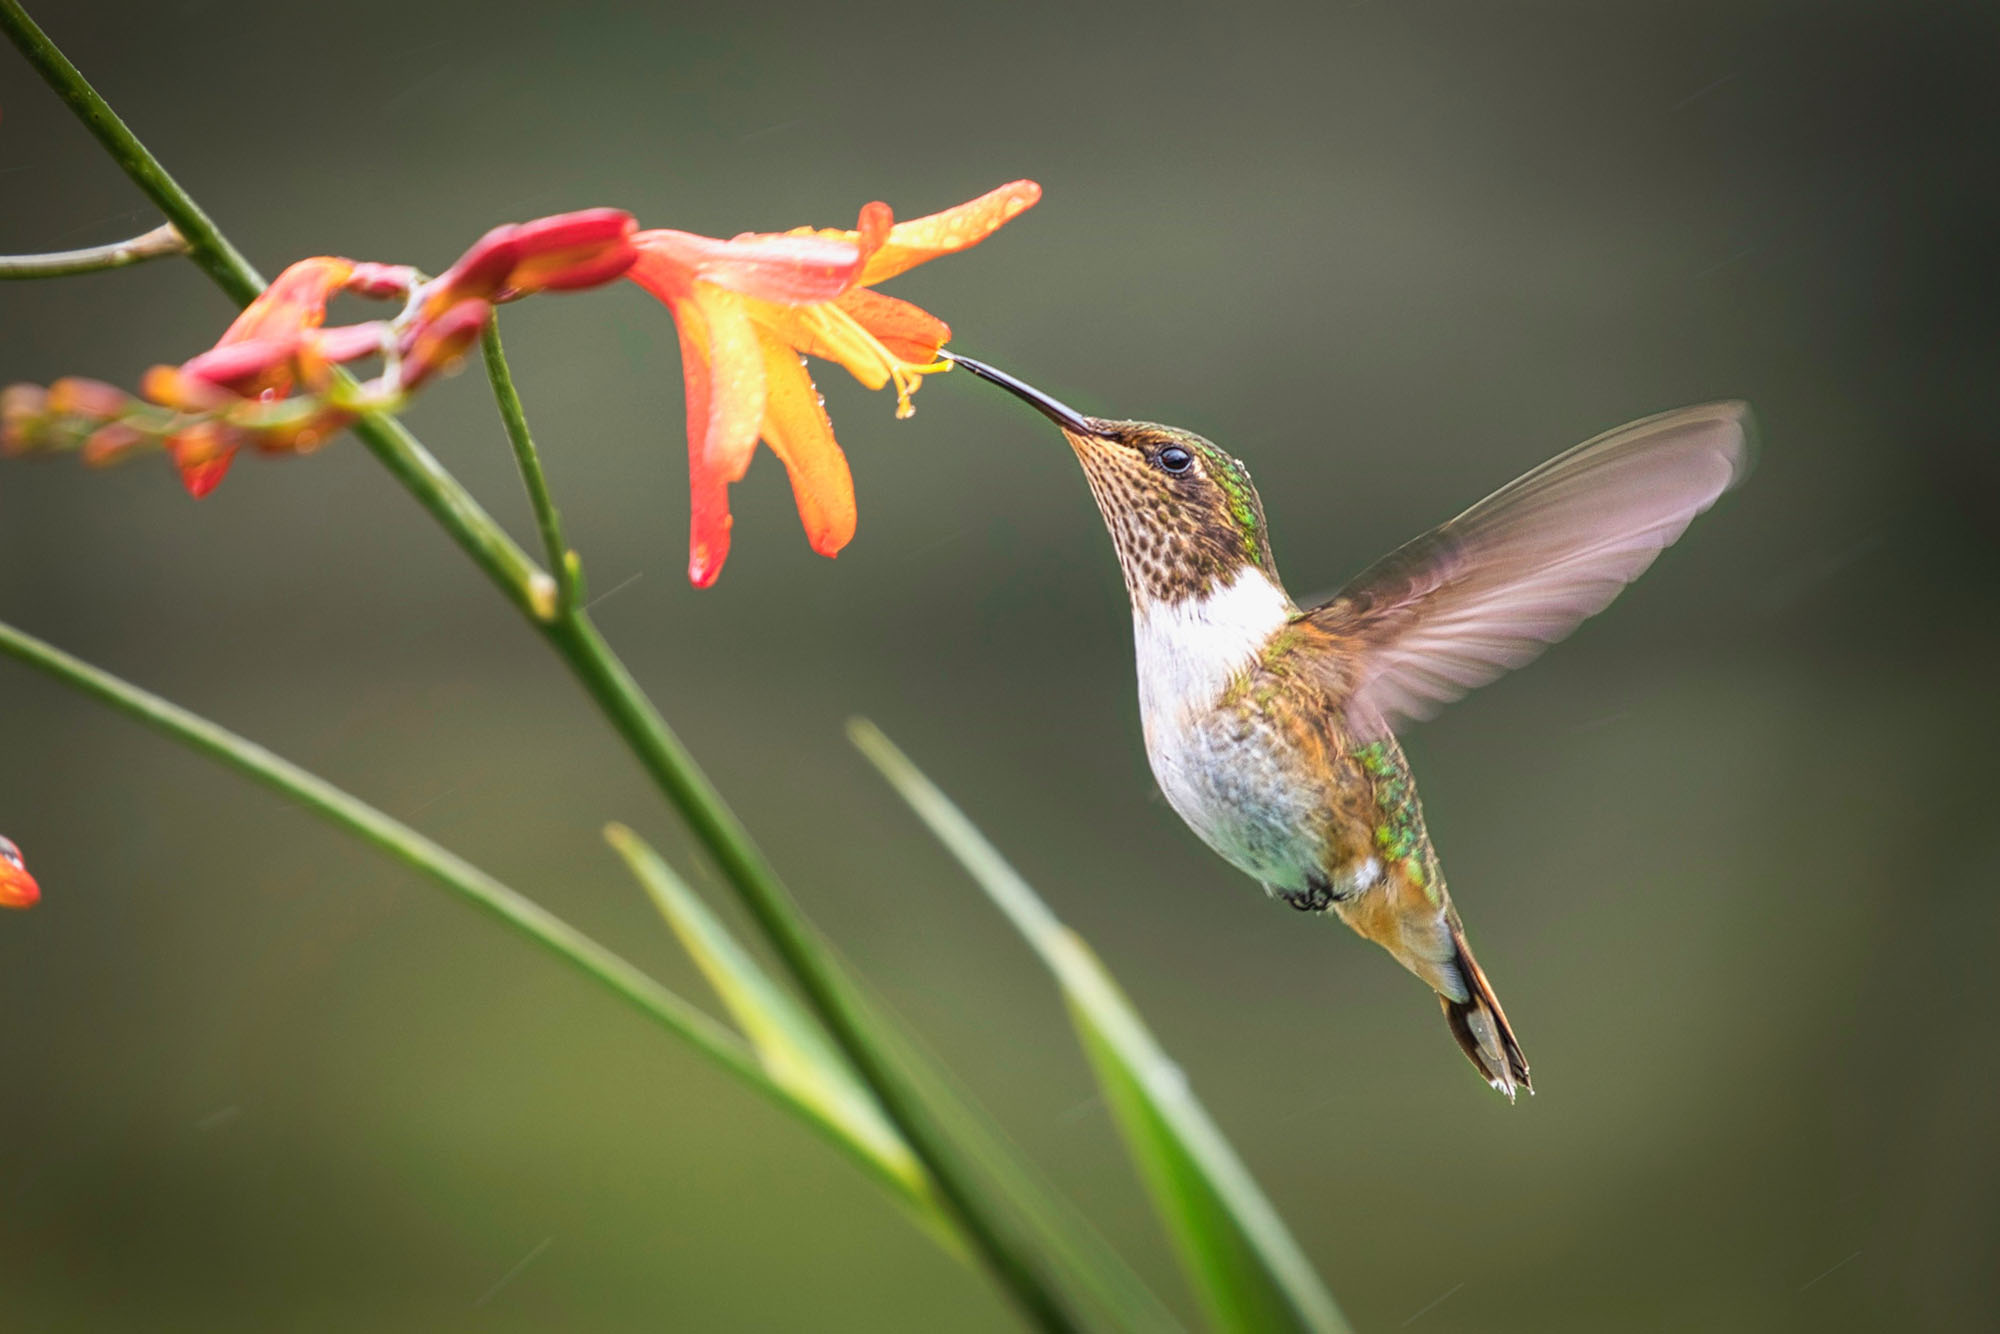 The hummingbird